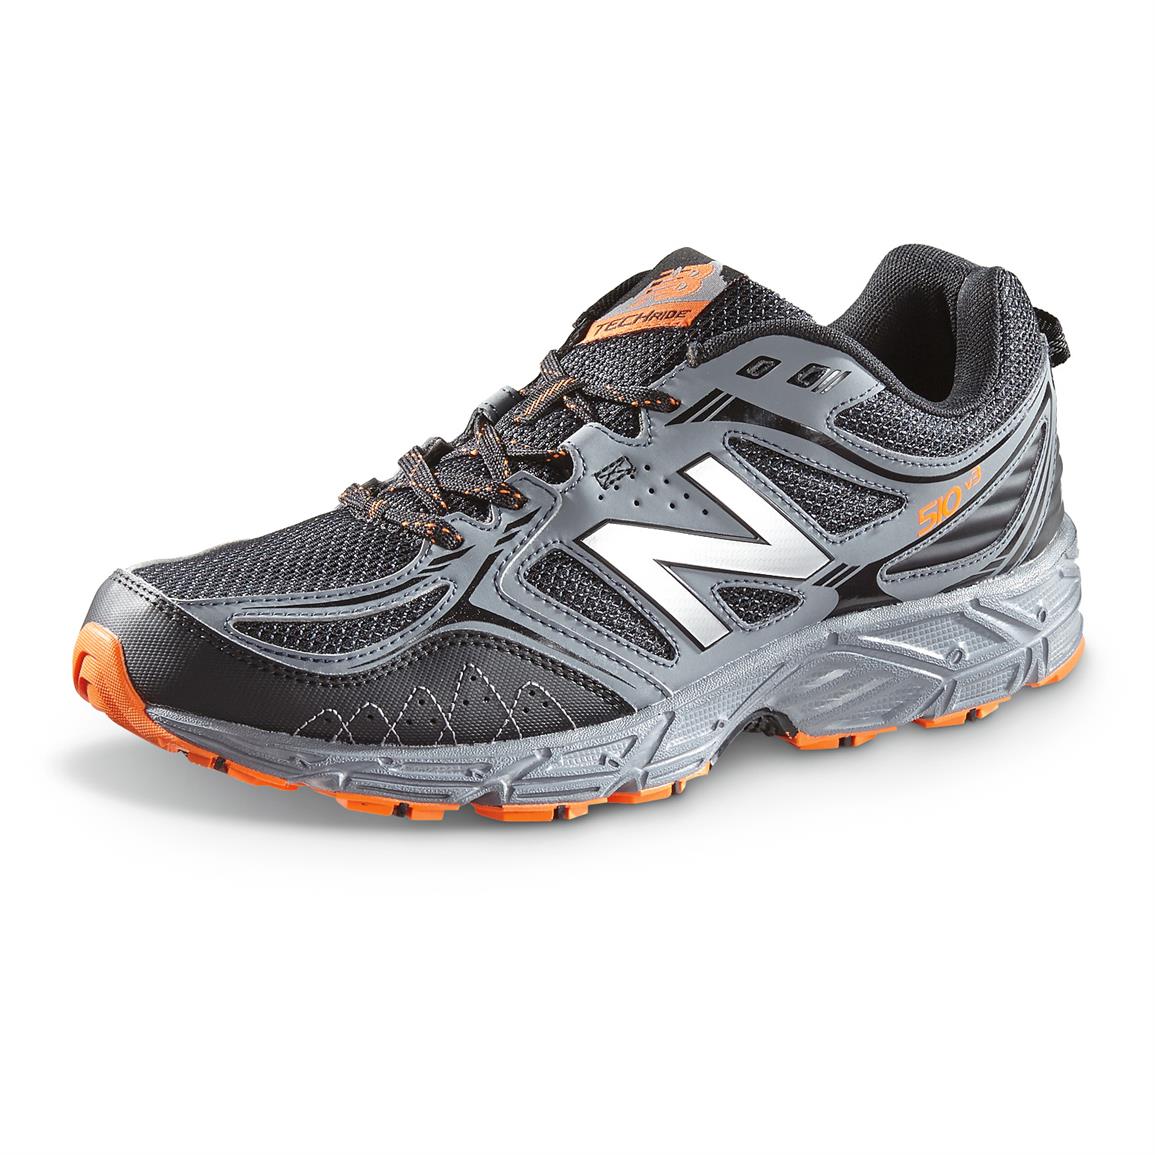 New Balance Men's 510 v3 Trail Running Shoes - 665026, Running Shoes ...